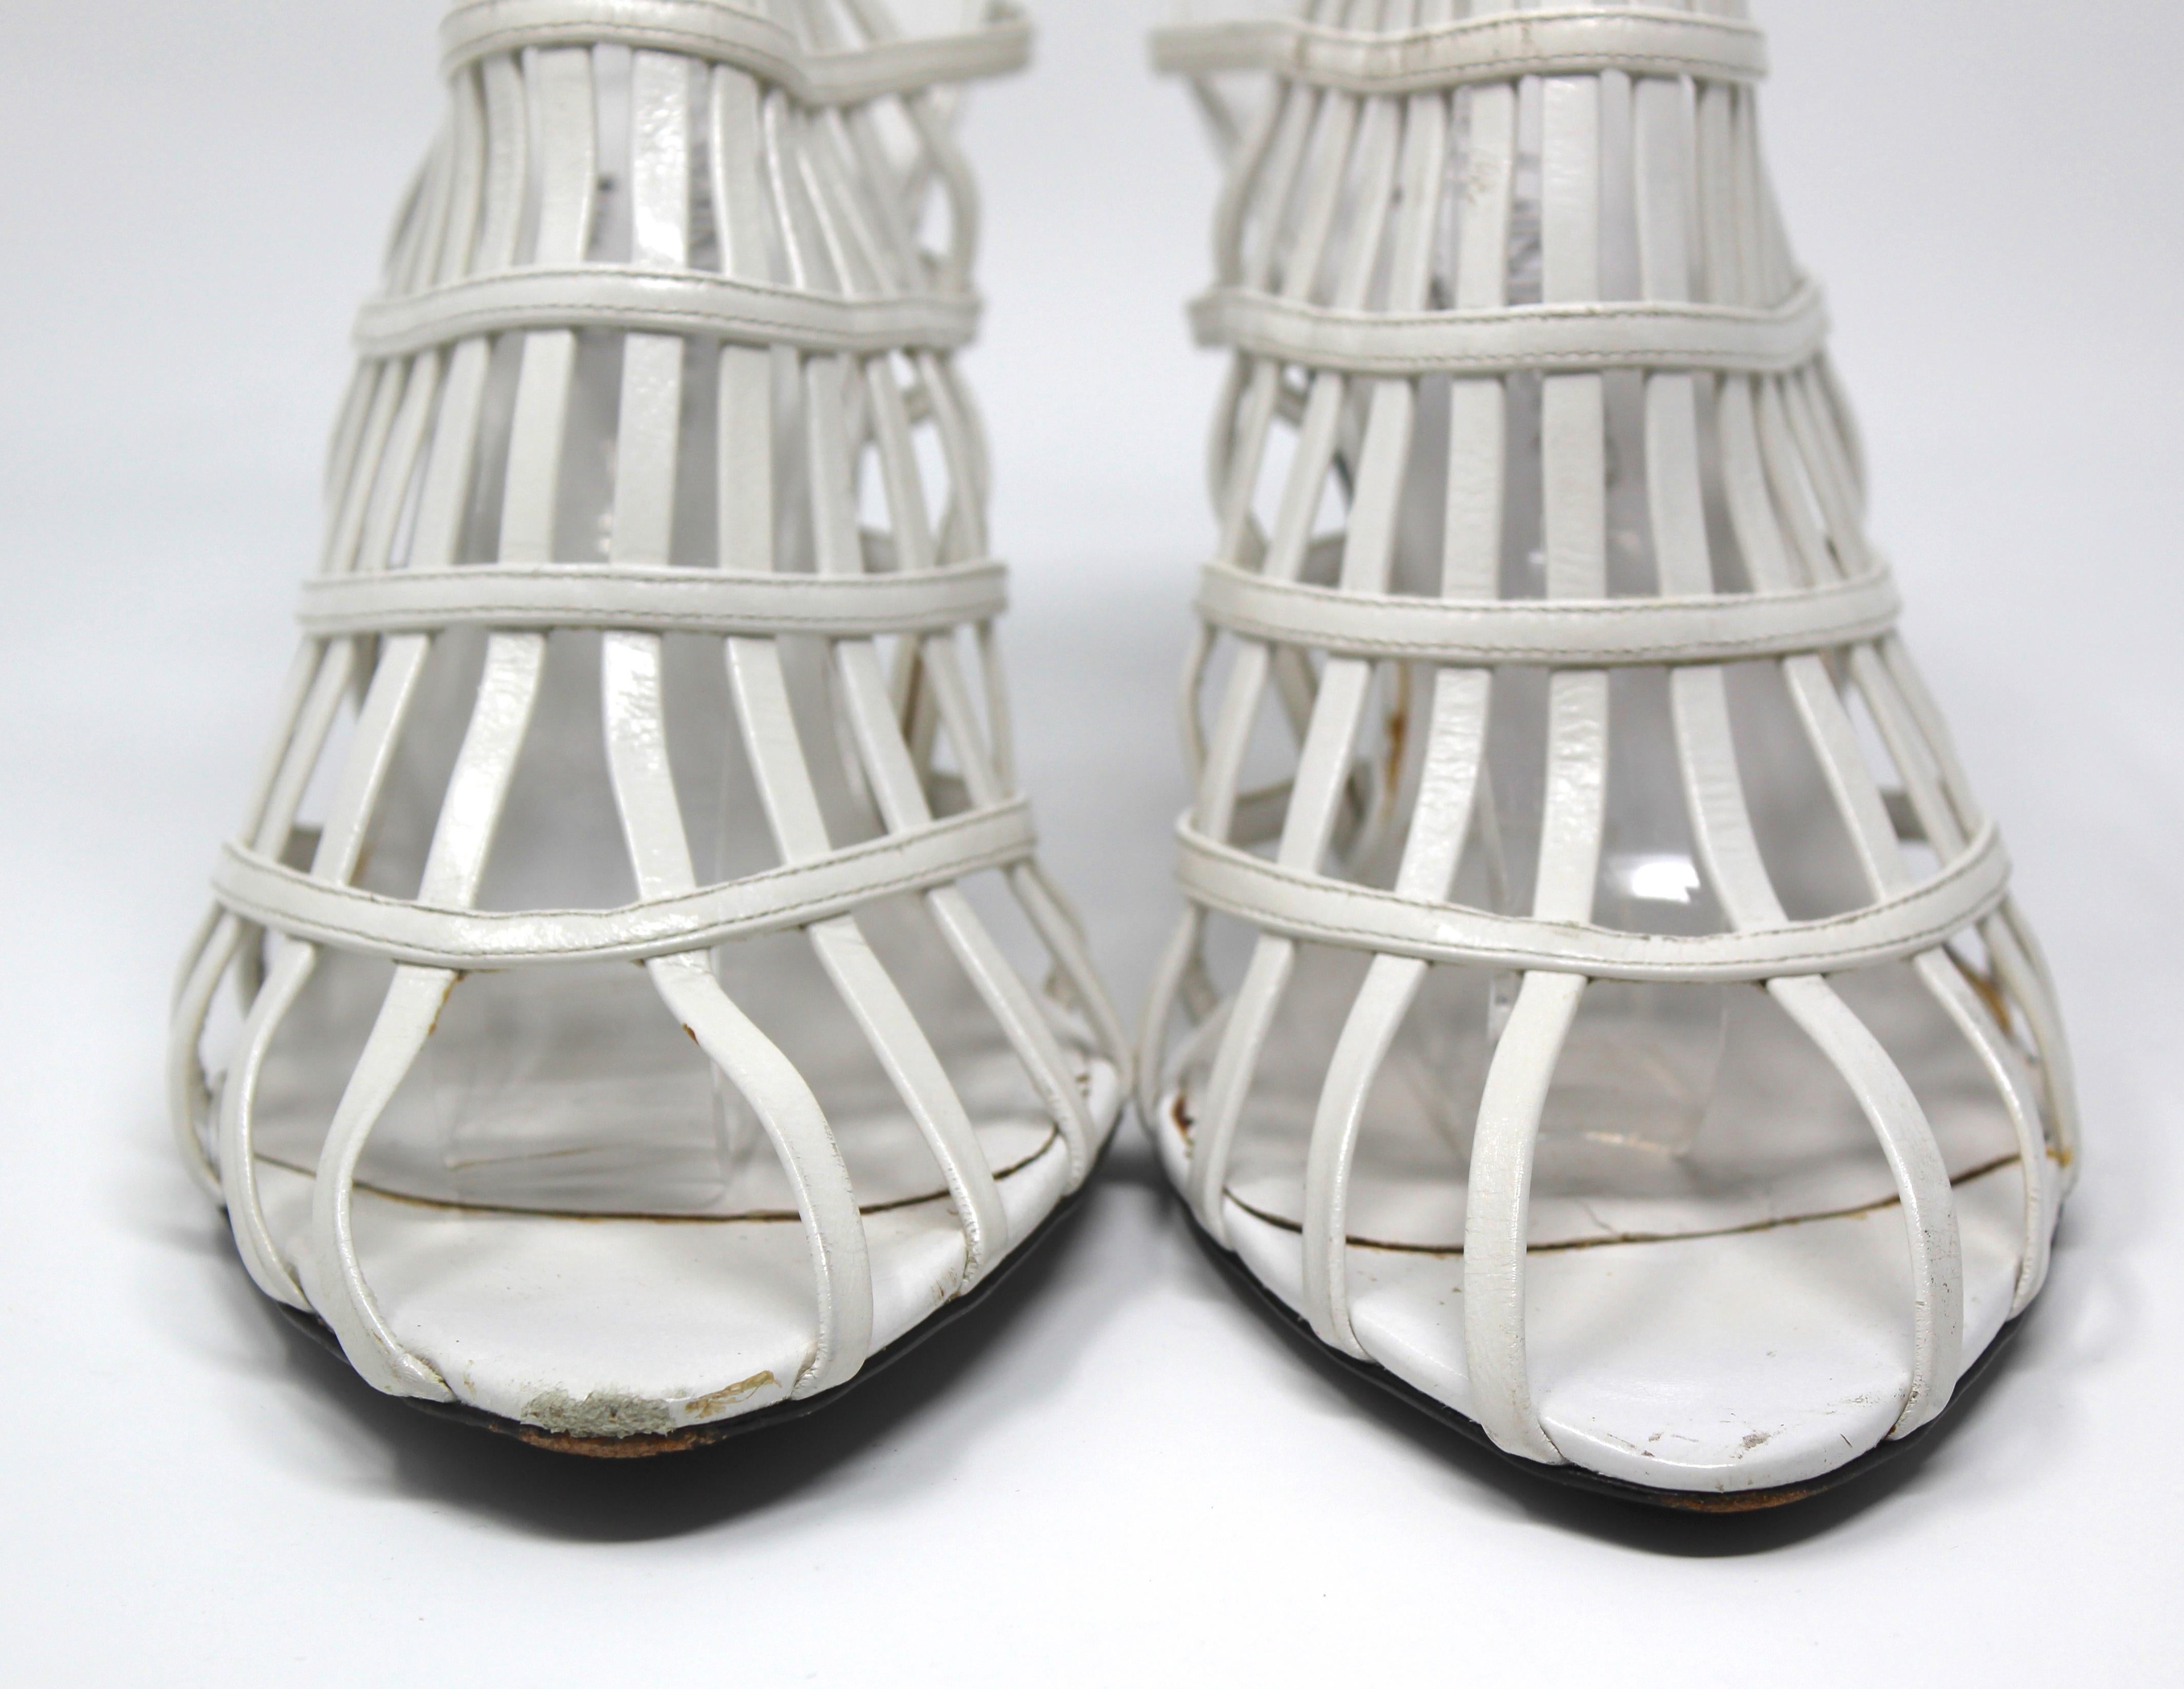 Yves Saint Laurent White Leather Strap Heels, Size 8 US / 38 EU, c. 2000's 7